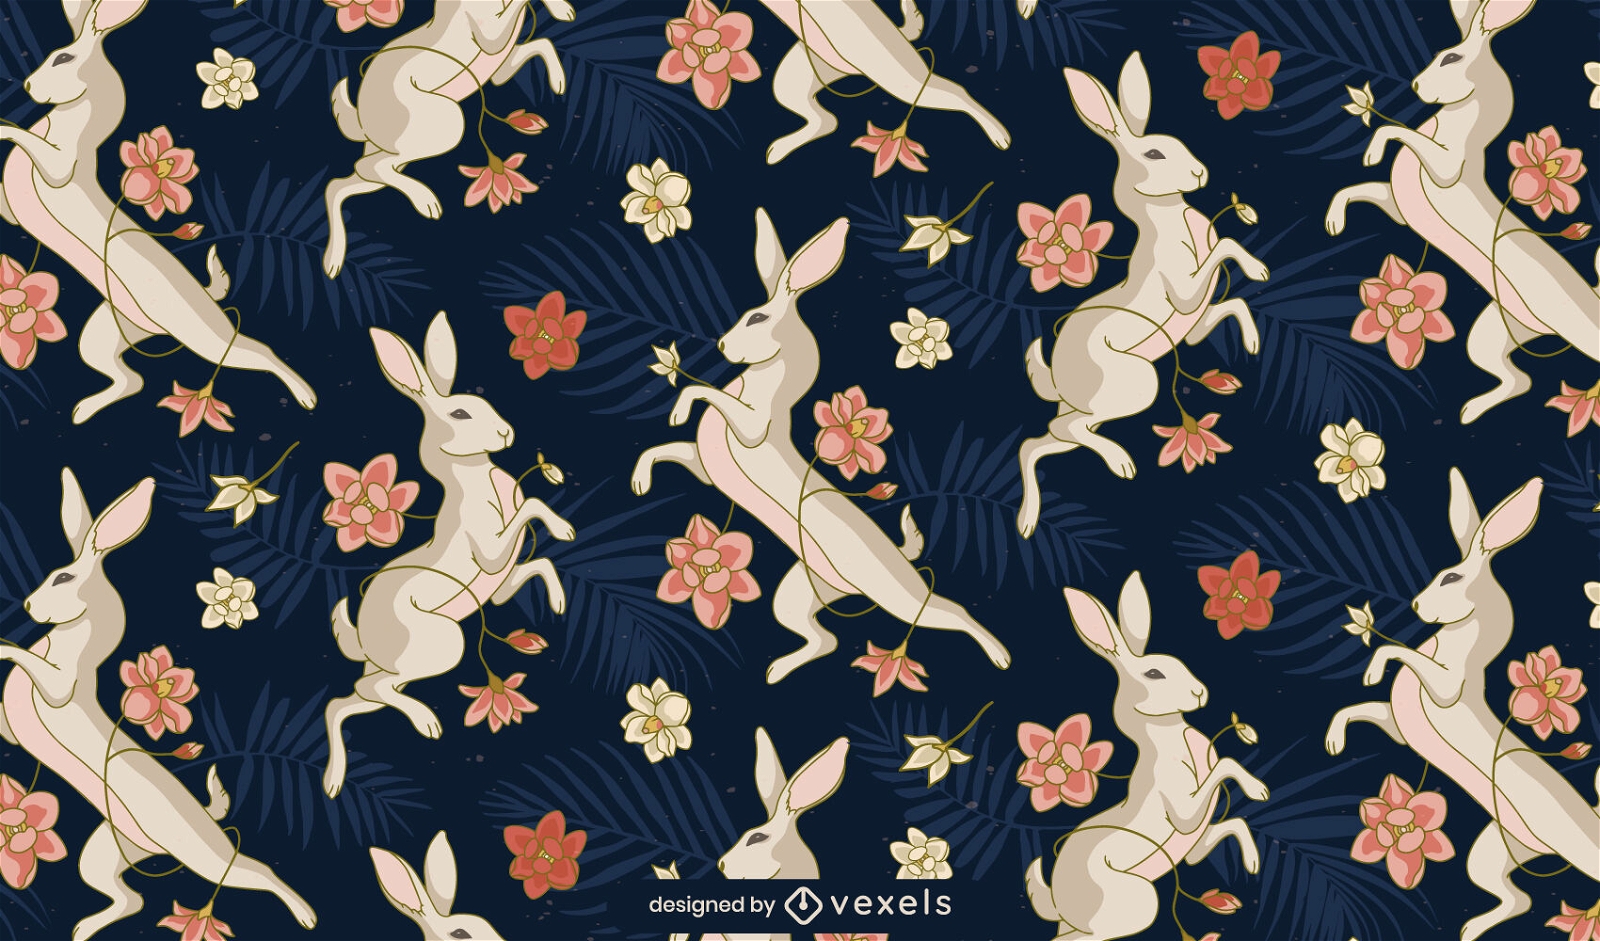 Floral rabbit pattern design